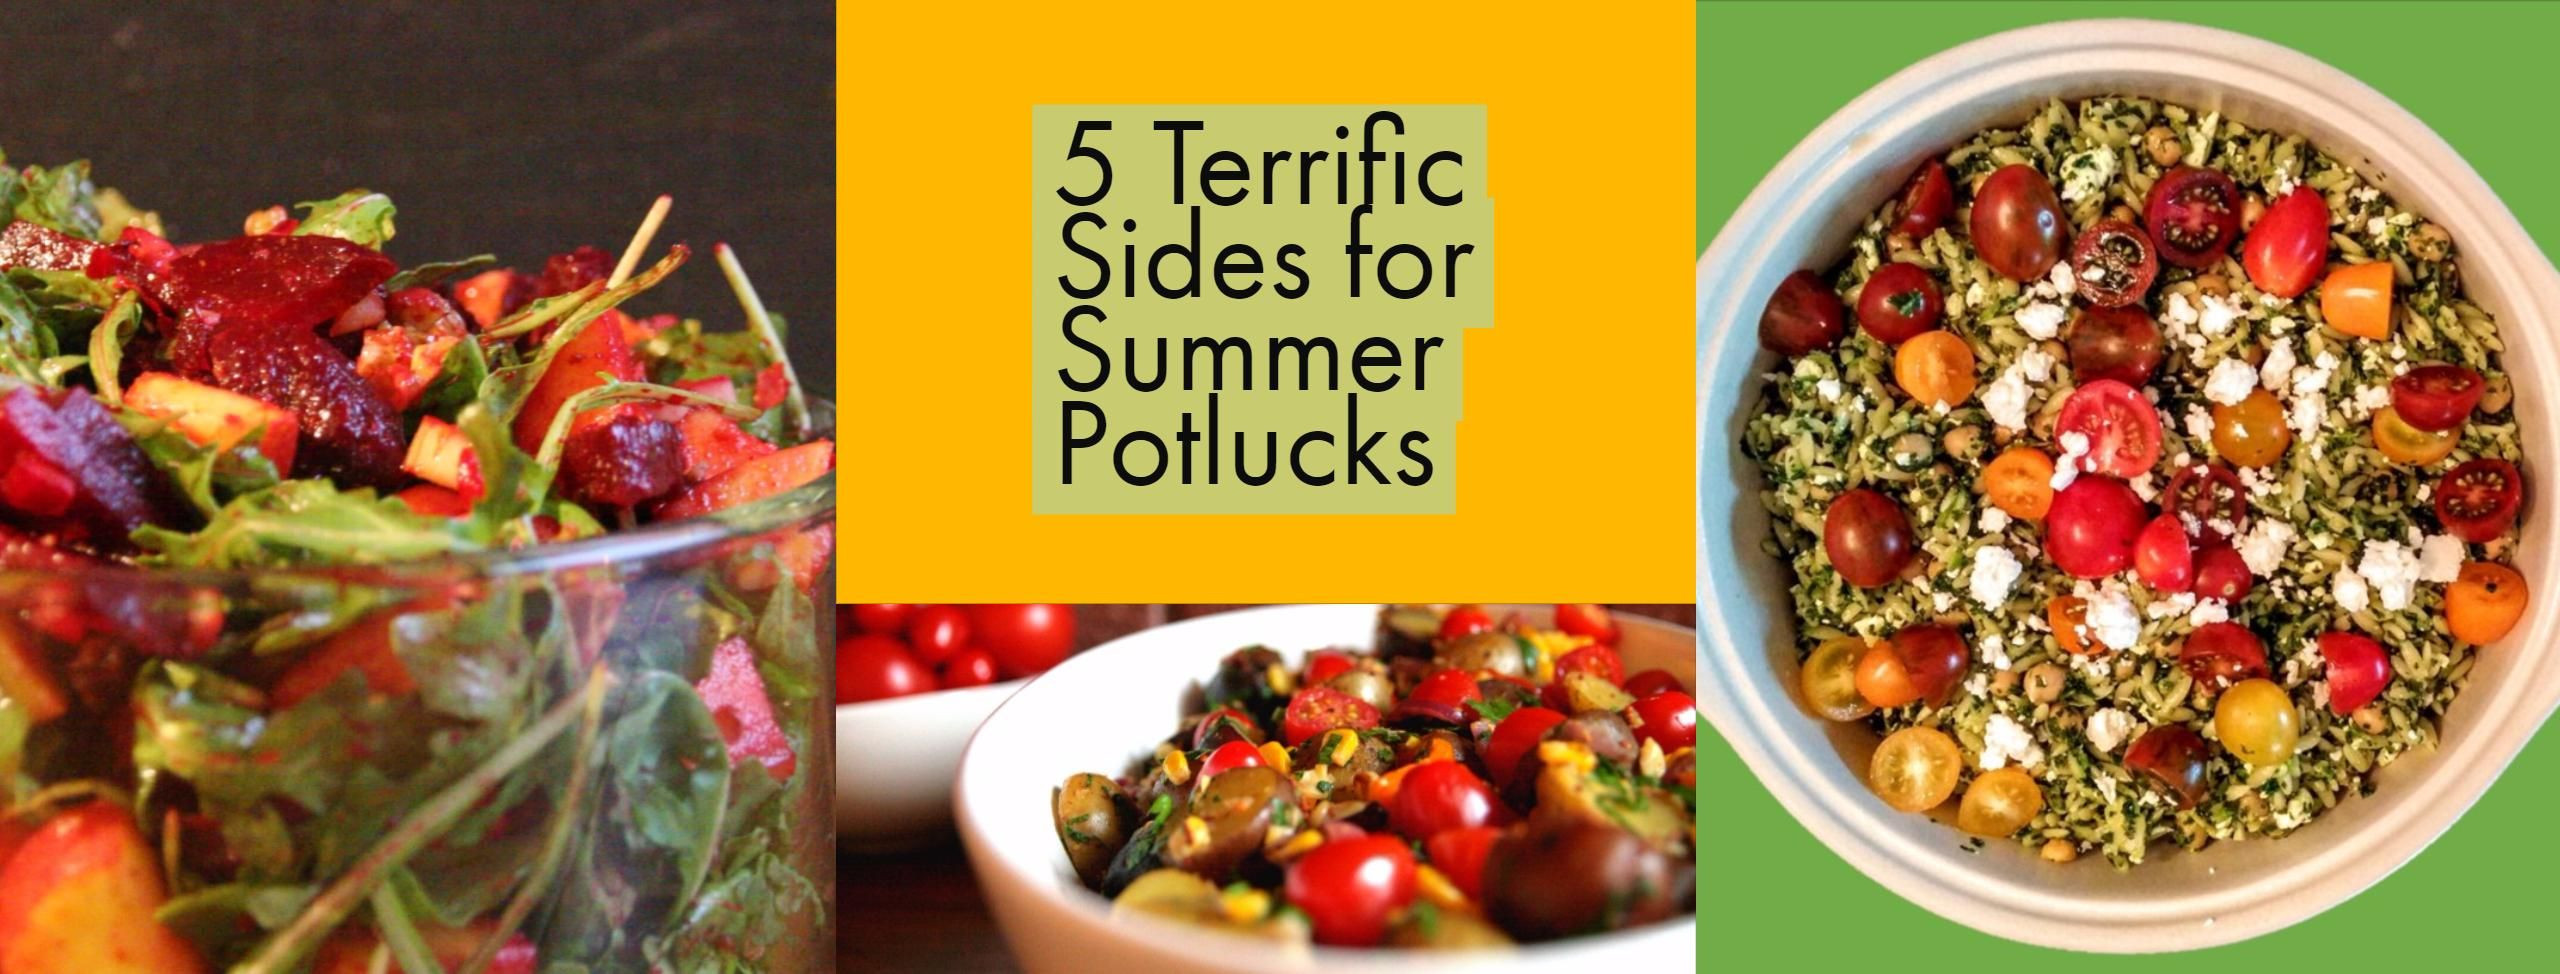 Summer Potluck Main Dishes
 5 Terrific Side Dishes for Summer Potlucks